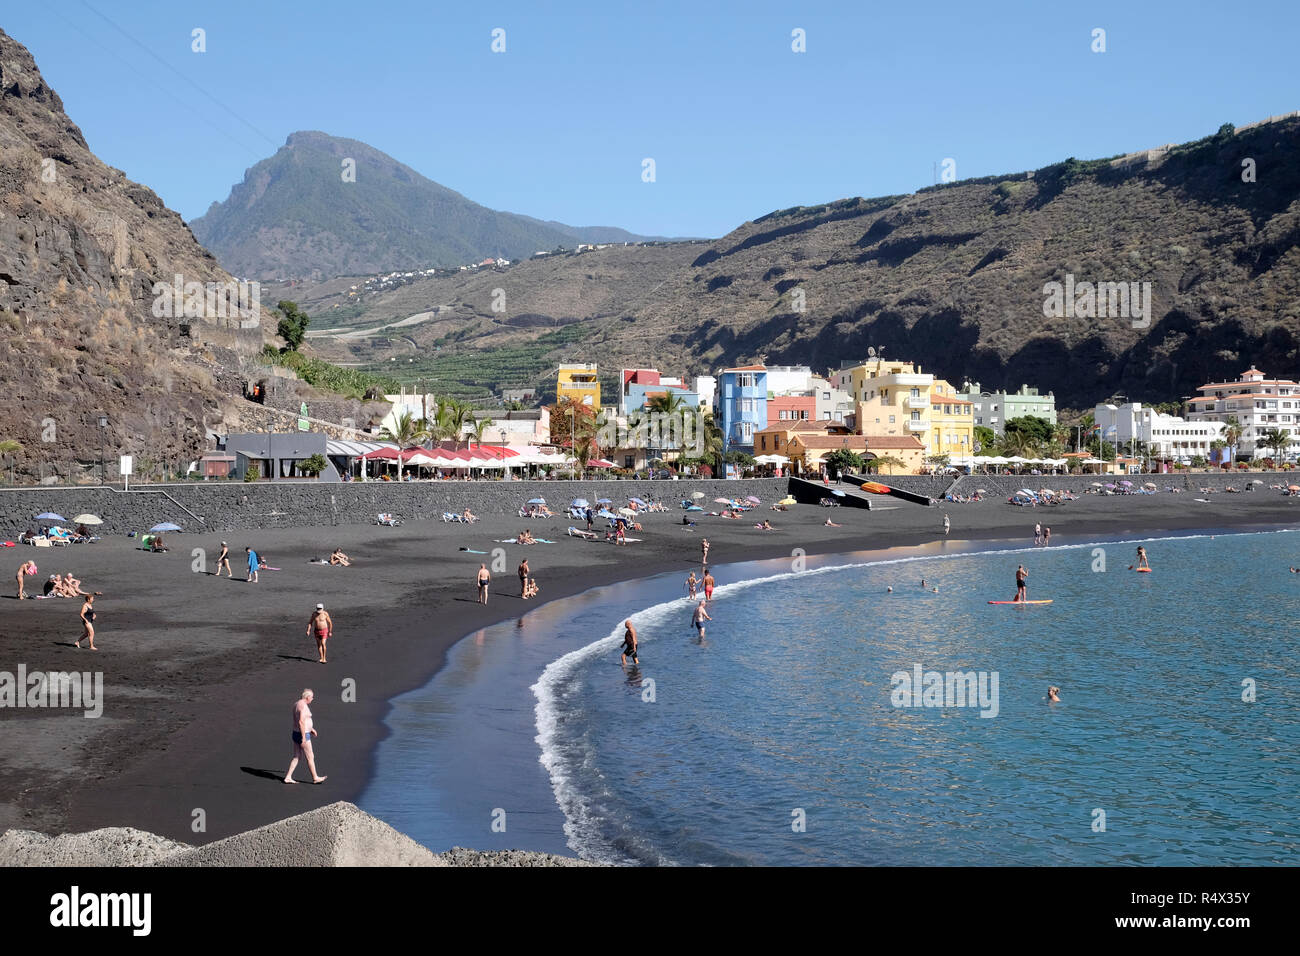 The Beach at Puerto de Tazacorte, La Palma with characteristic dark volcanic sand.  Photo taken in November. Stock Photo